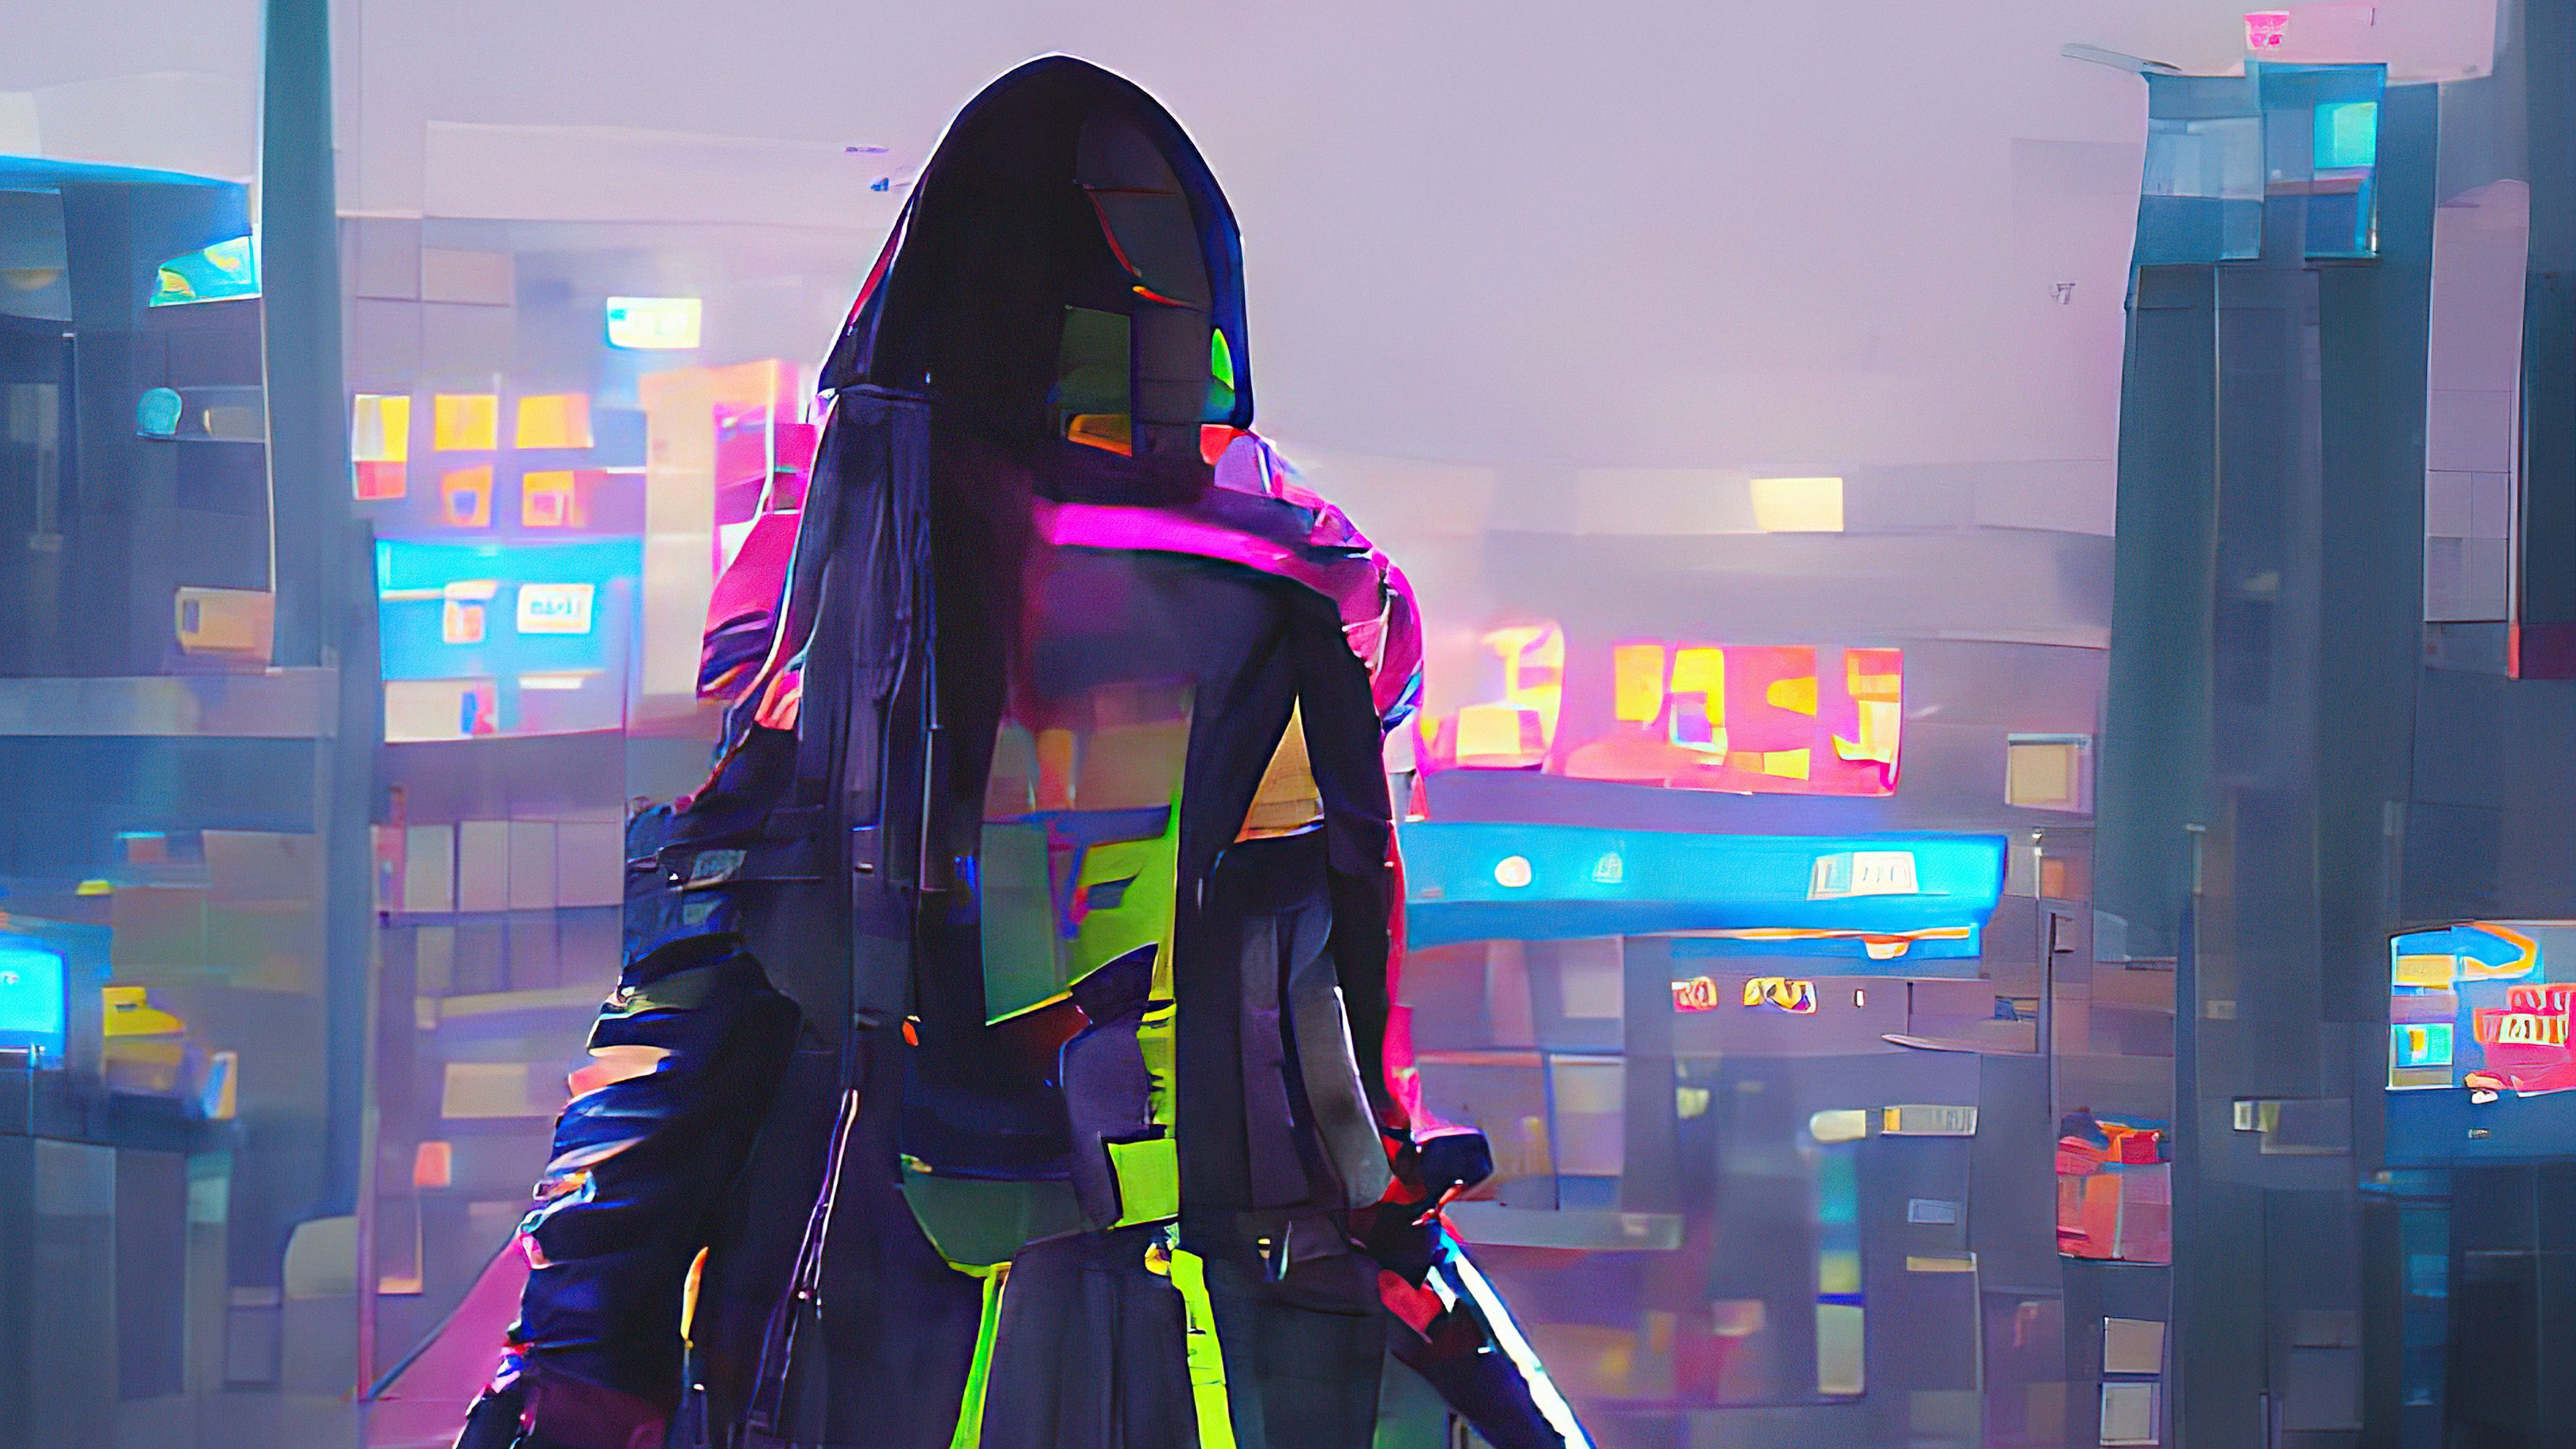 Cyberpunk Neon Girl Digital Art 4k HD 4k Wallpaper, Image, Background, Photo and Picture